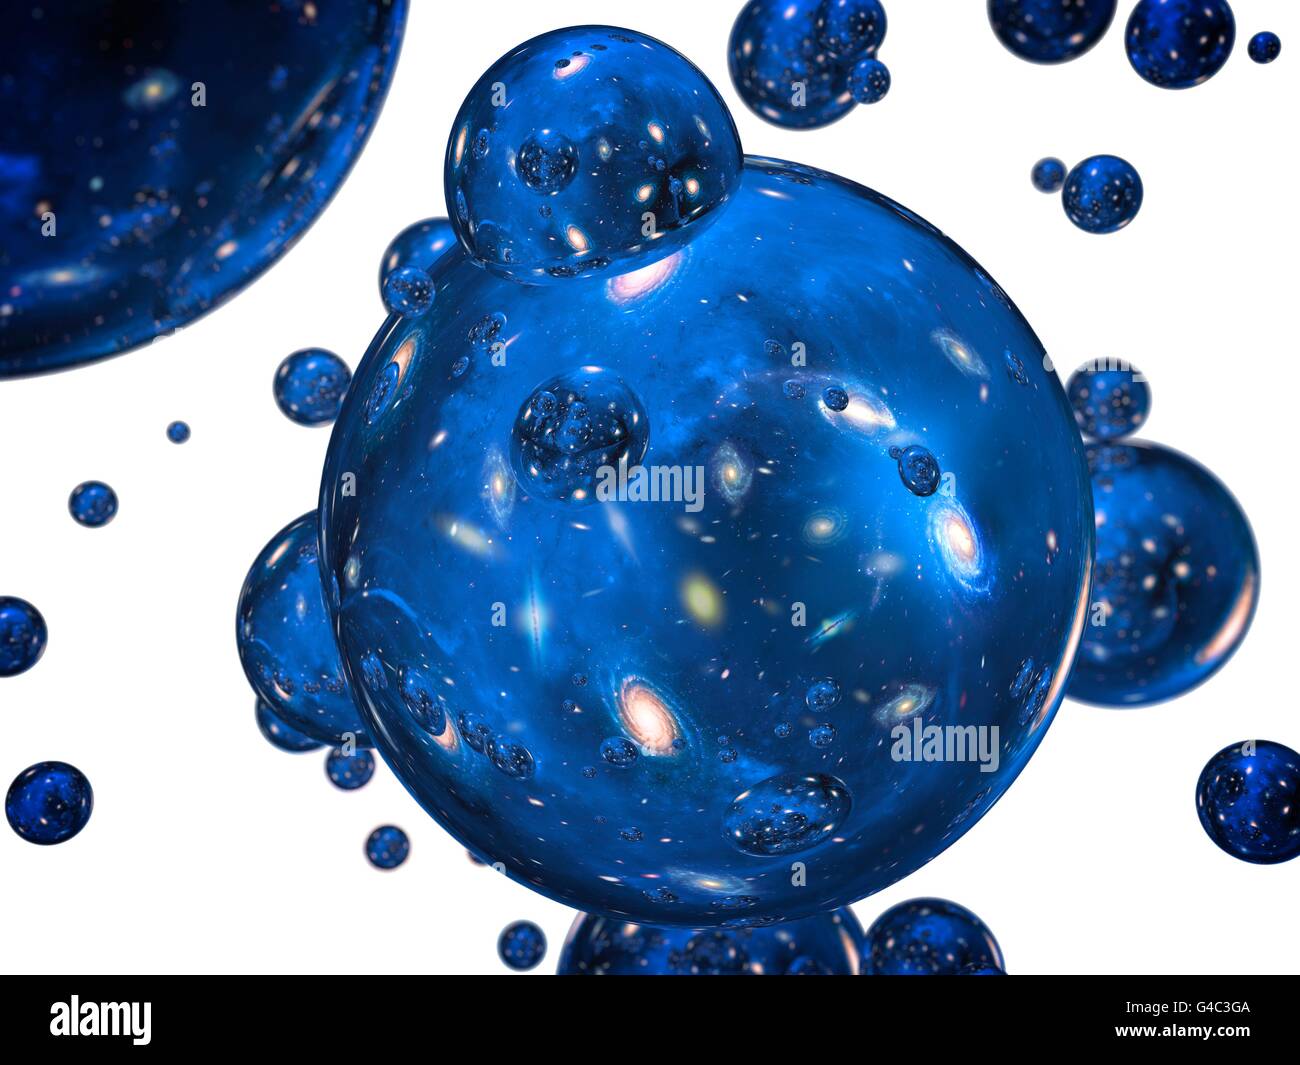 Universos Burbuja Equipo Ilustracion De Multiples Universos